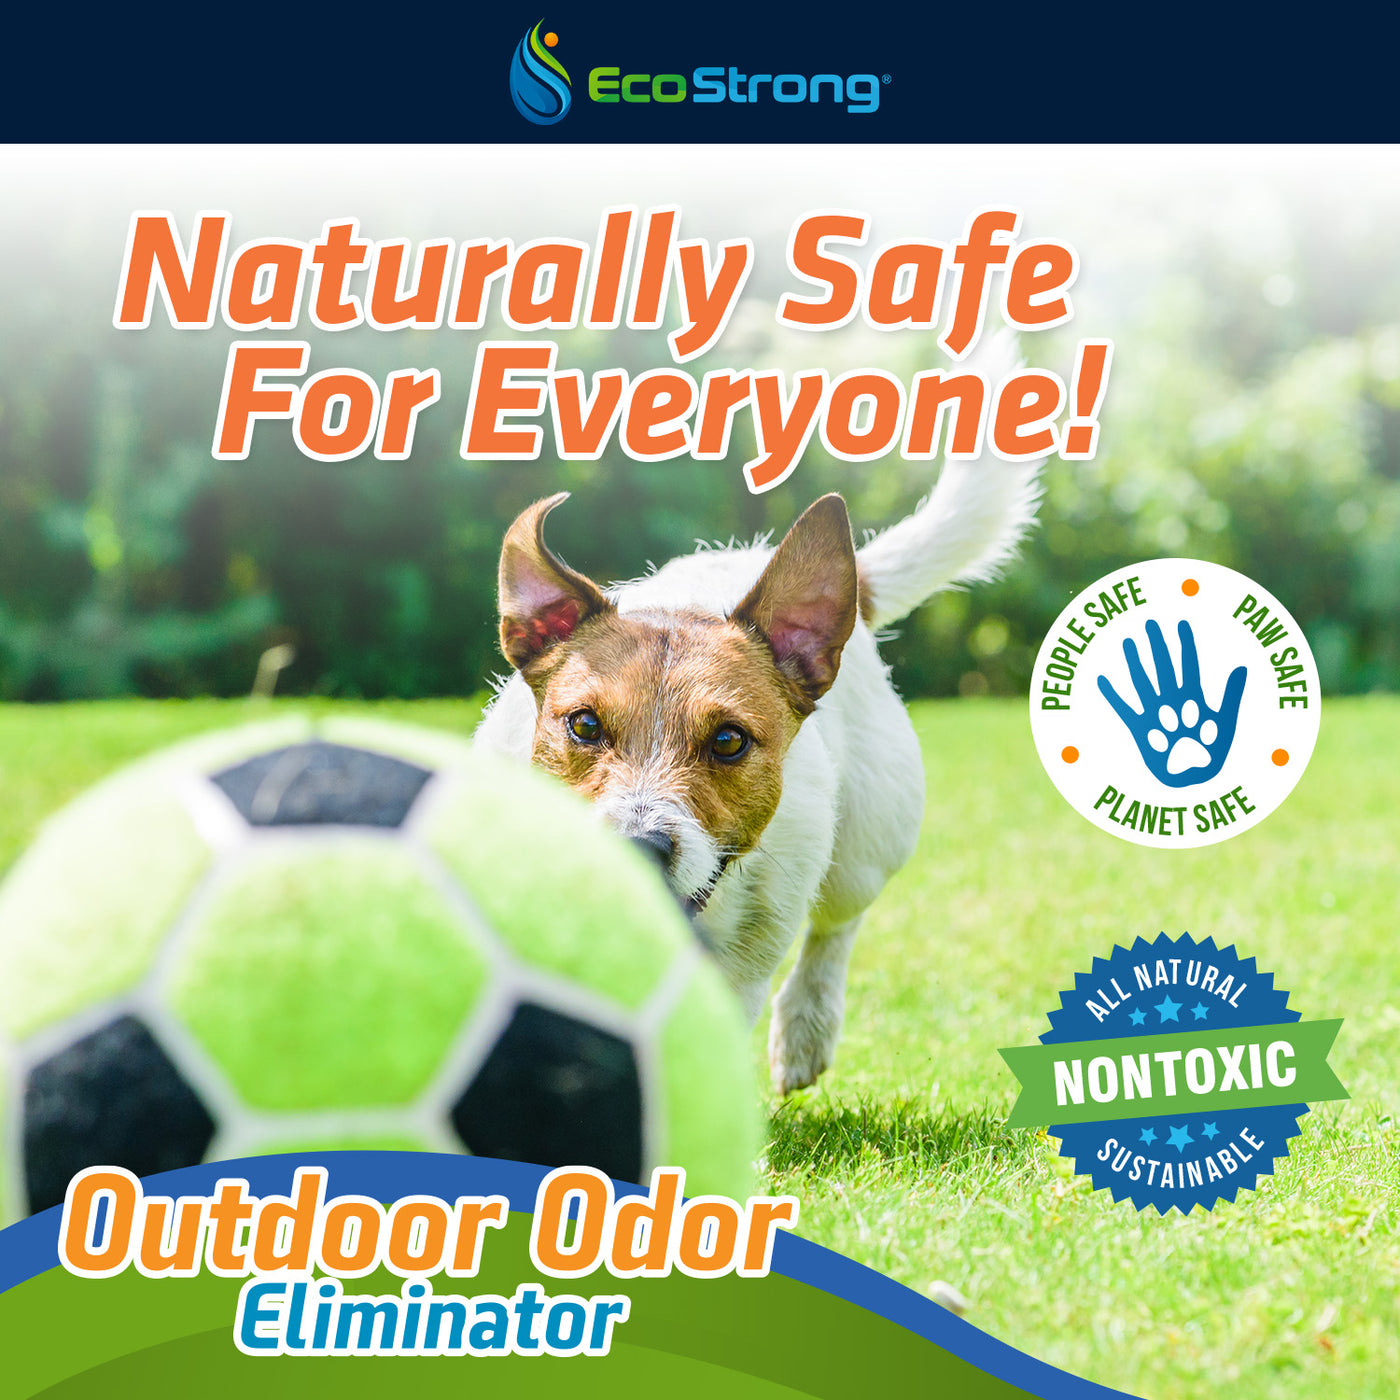 Eco Strong Outdoor Odor Eliminator 1 gallon jug and sprayer ##size_1-gallon-jug-and-multi-use-sprayer